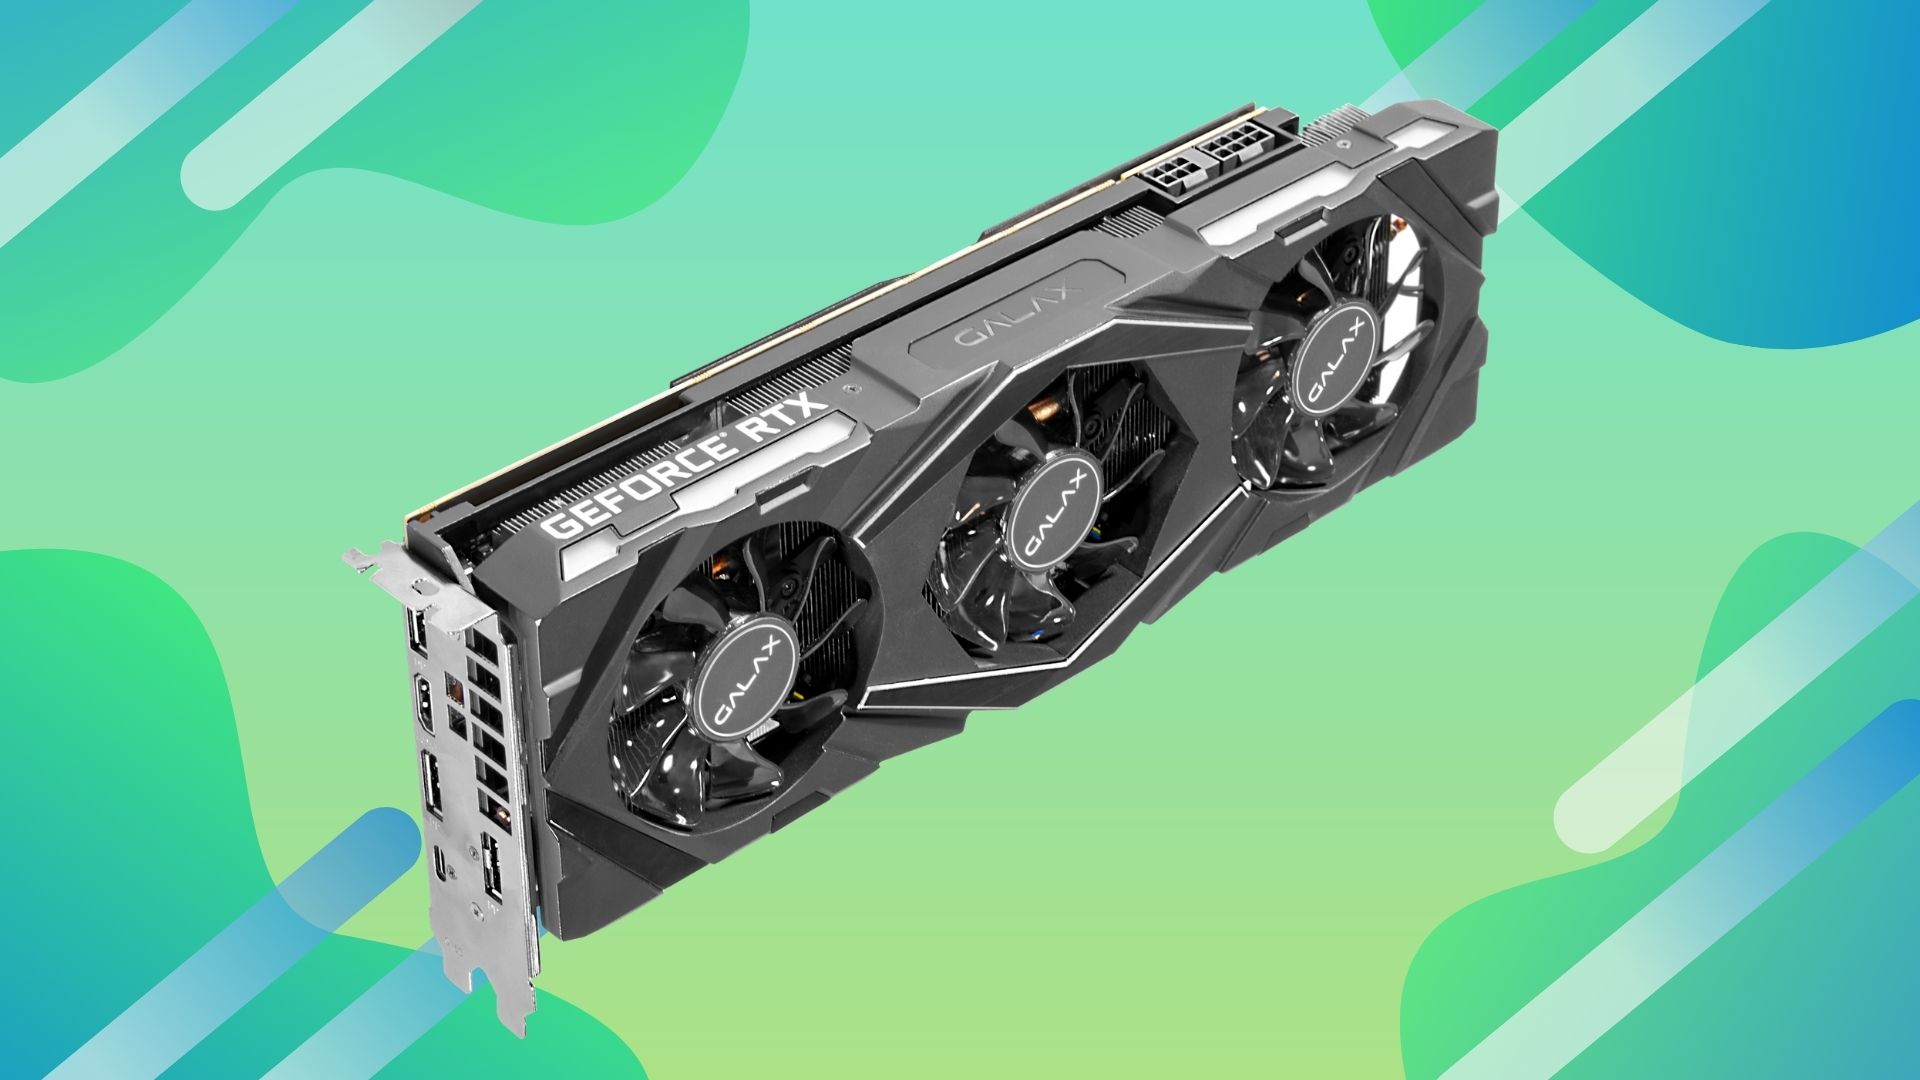 Galax RTX 3080 GPU launching with new cryptomining limiter TechRadar